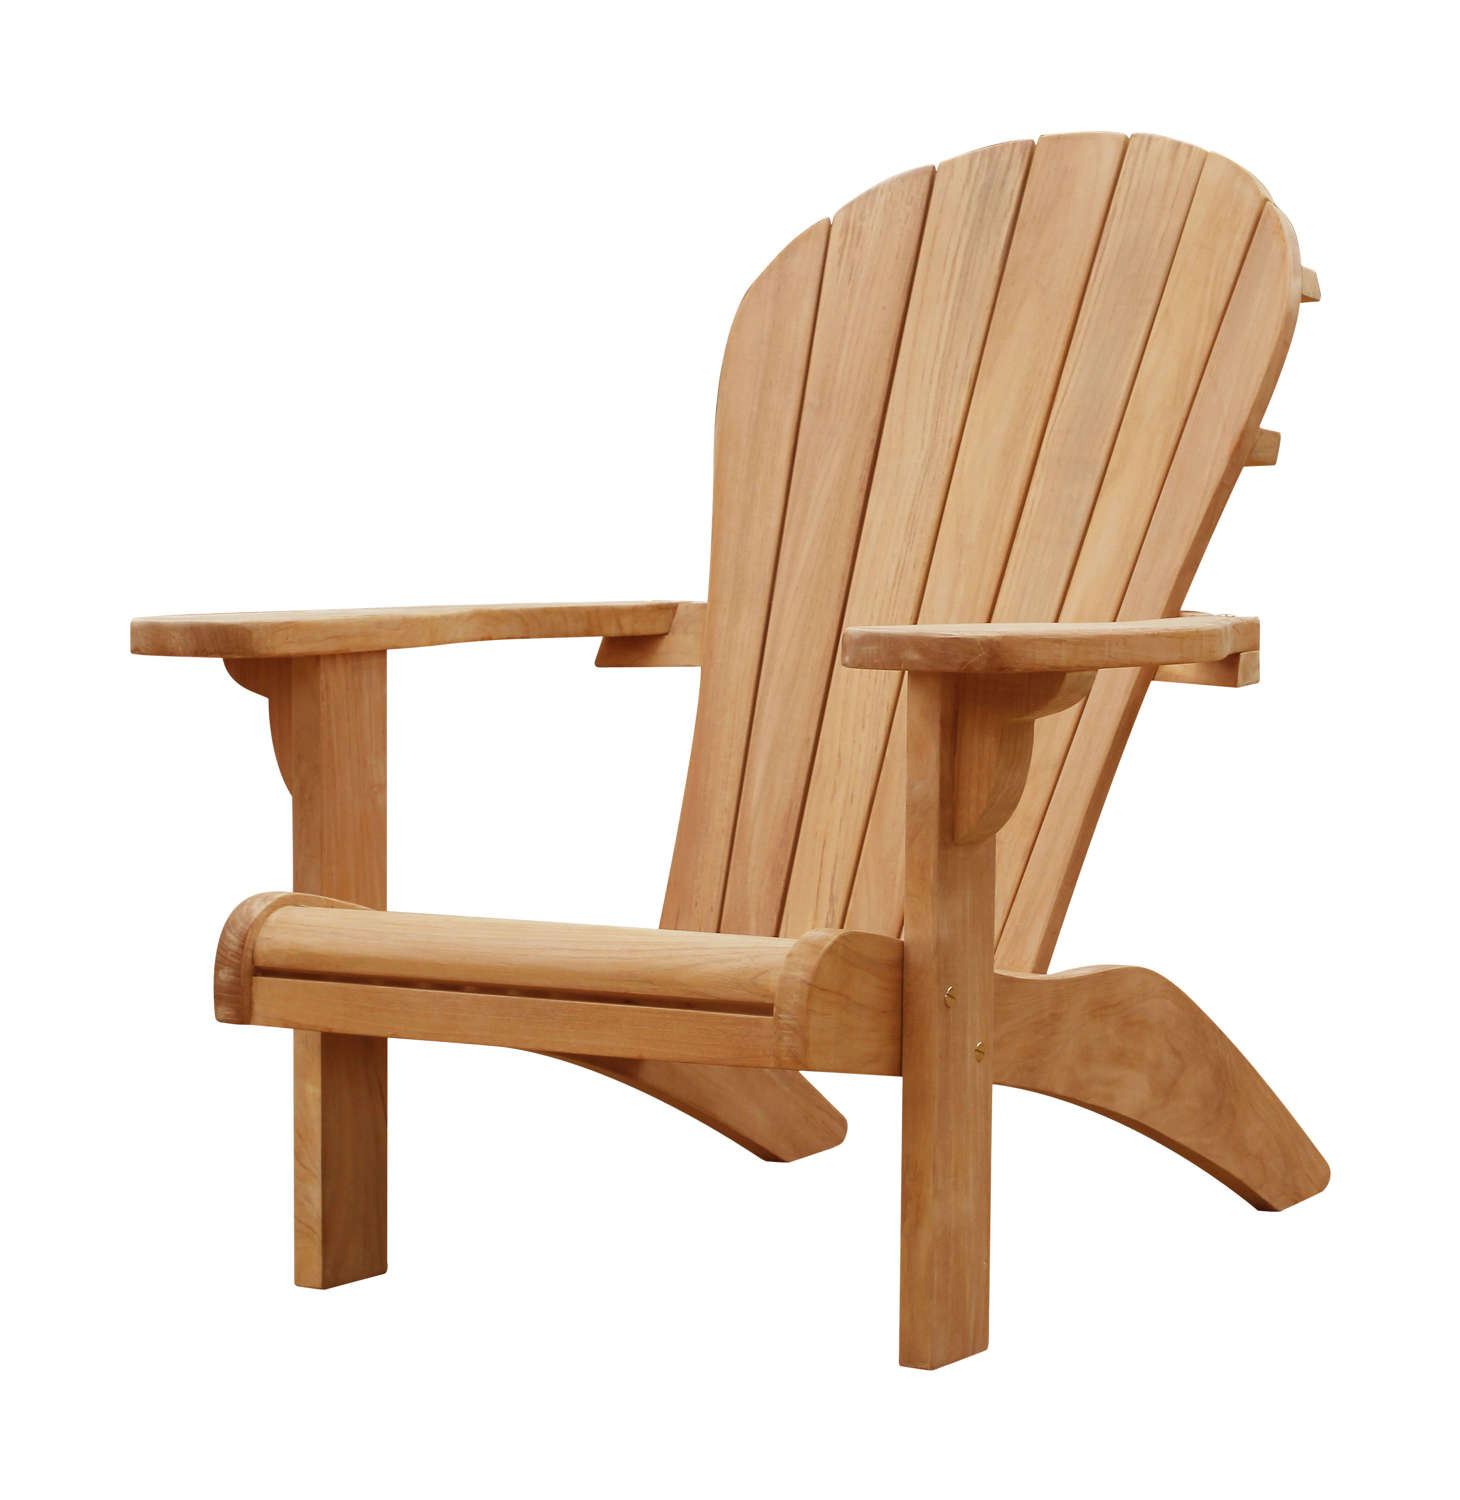 Teak Adirondack Chair - Teak Garden Chair